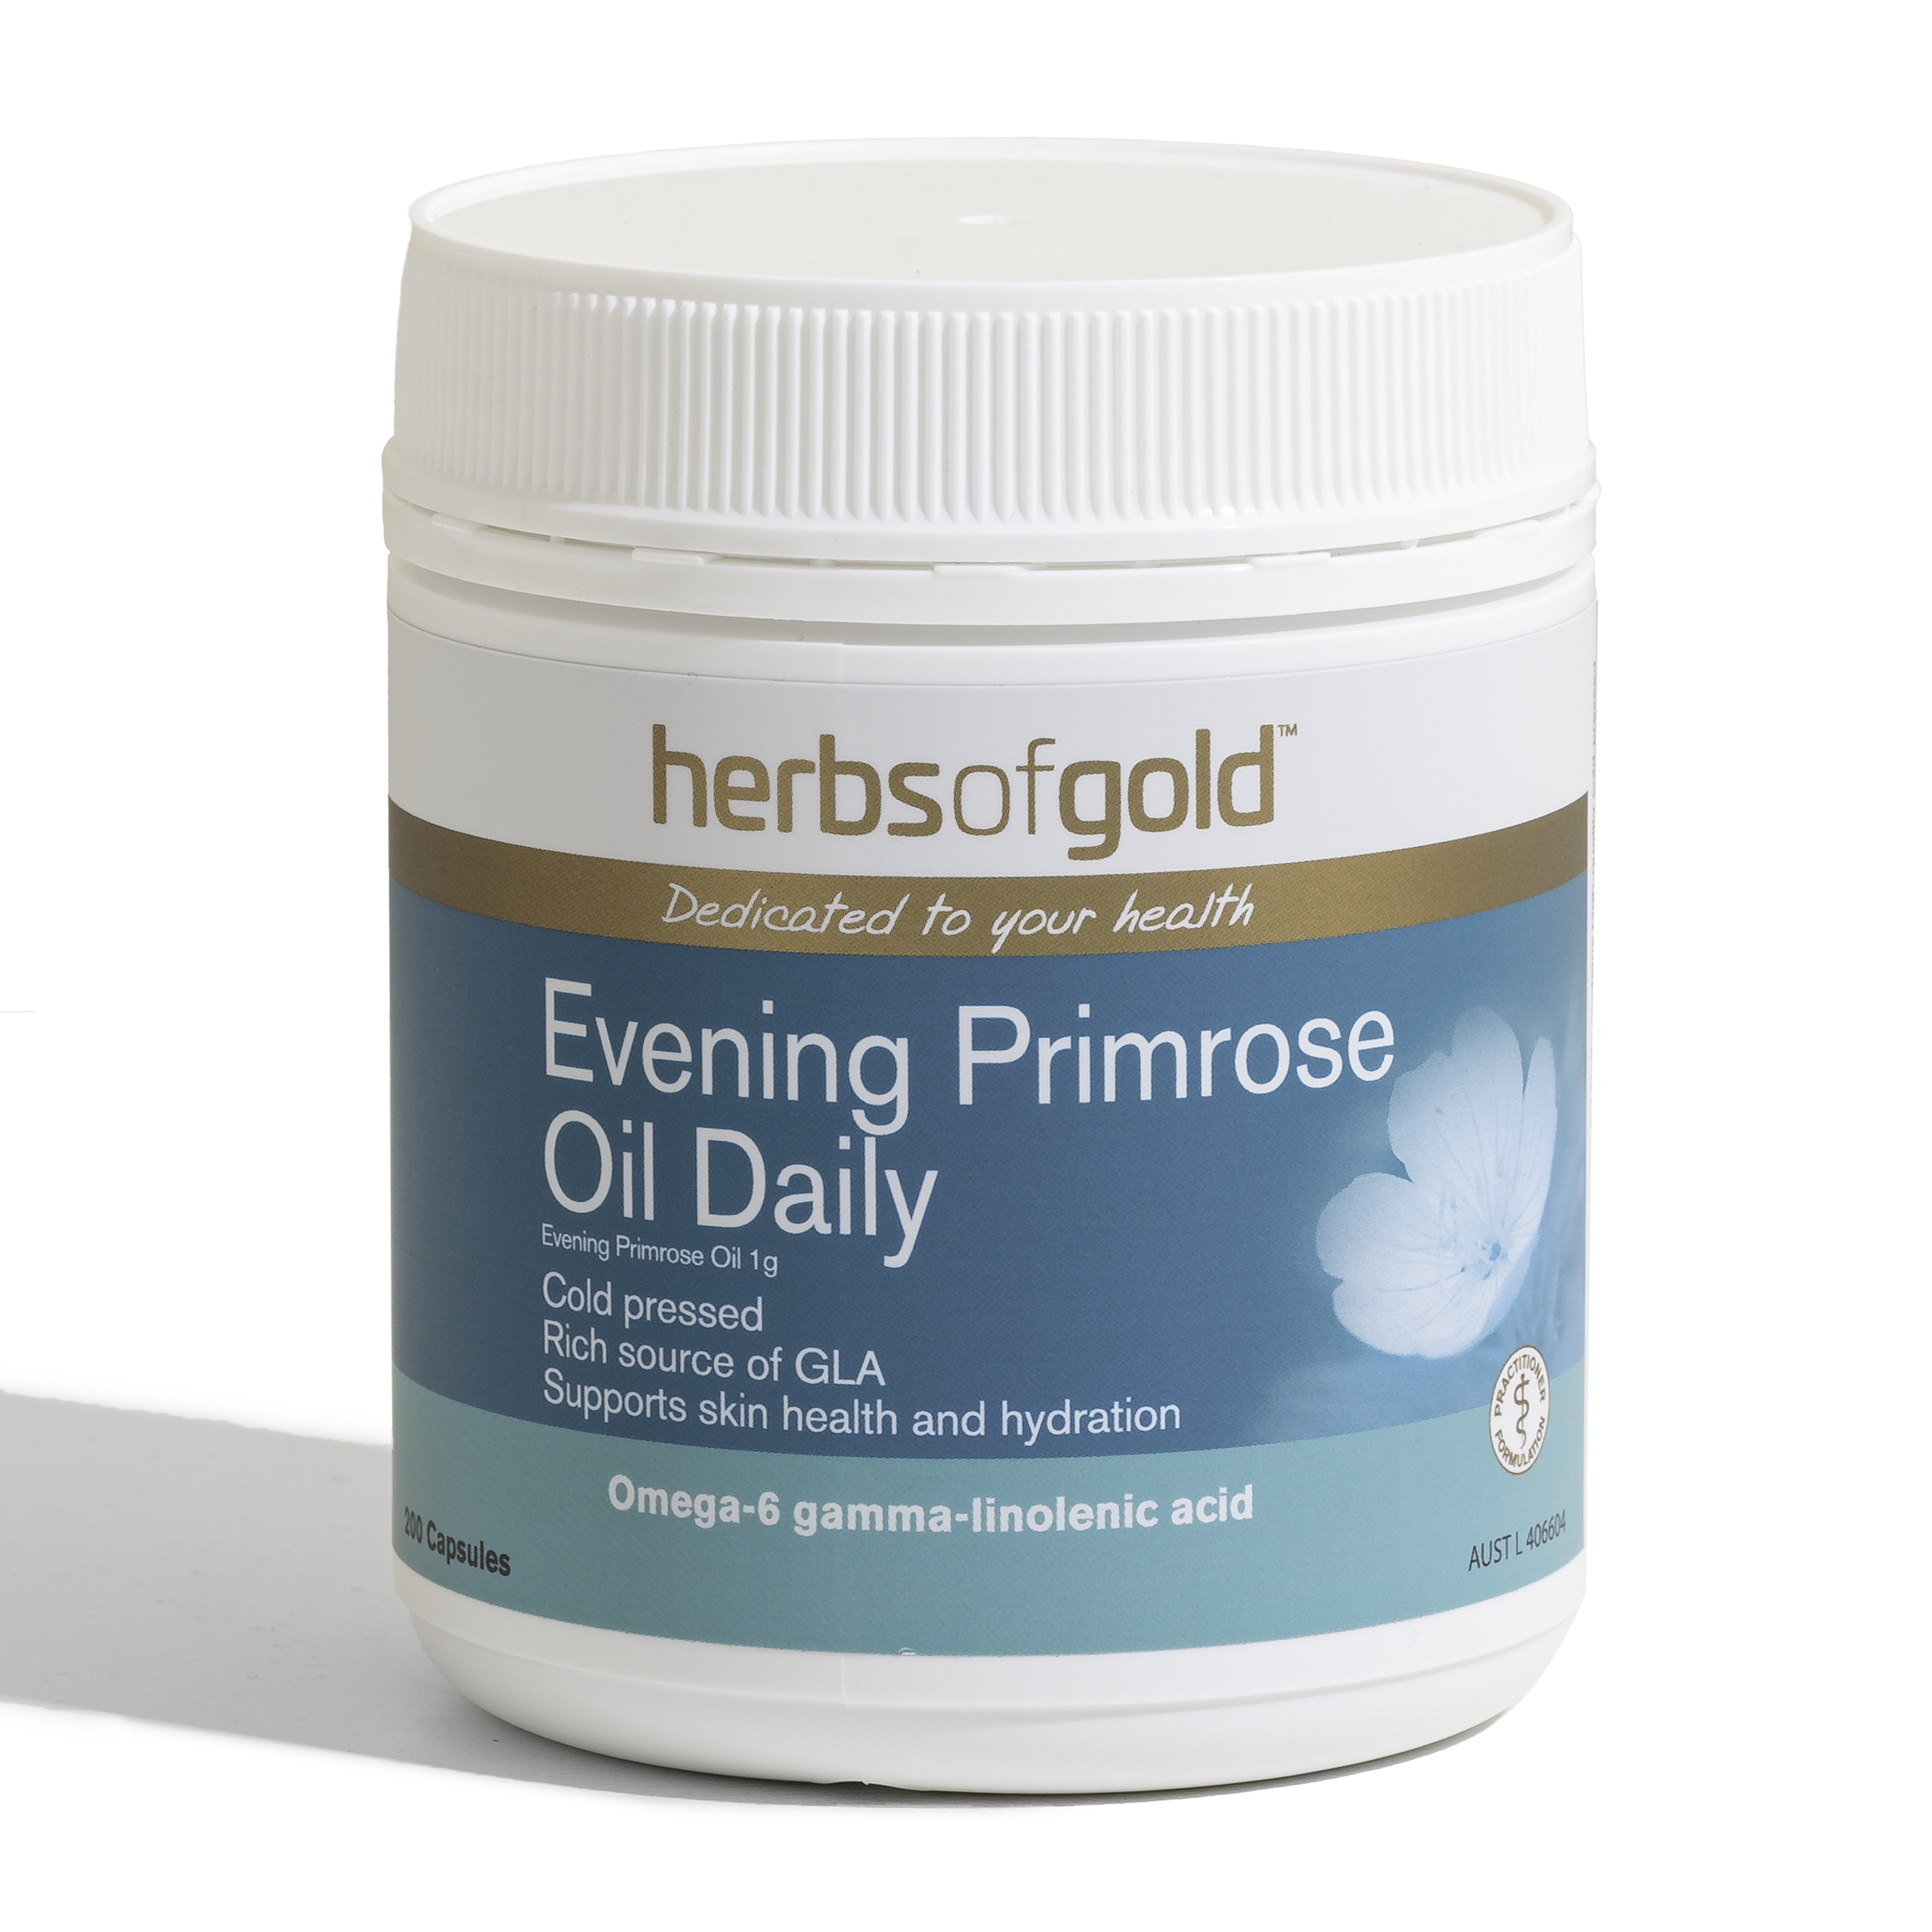 Evening Primrose Oil Daily